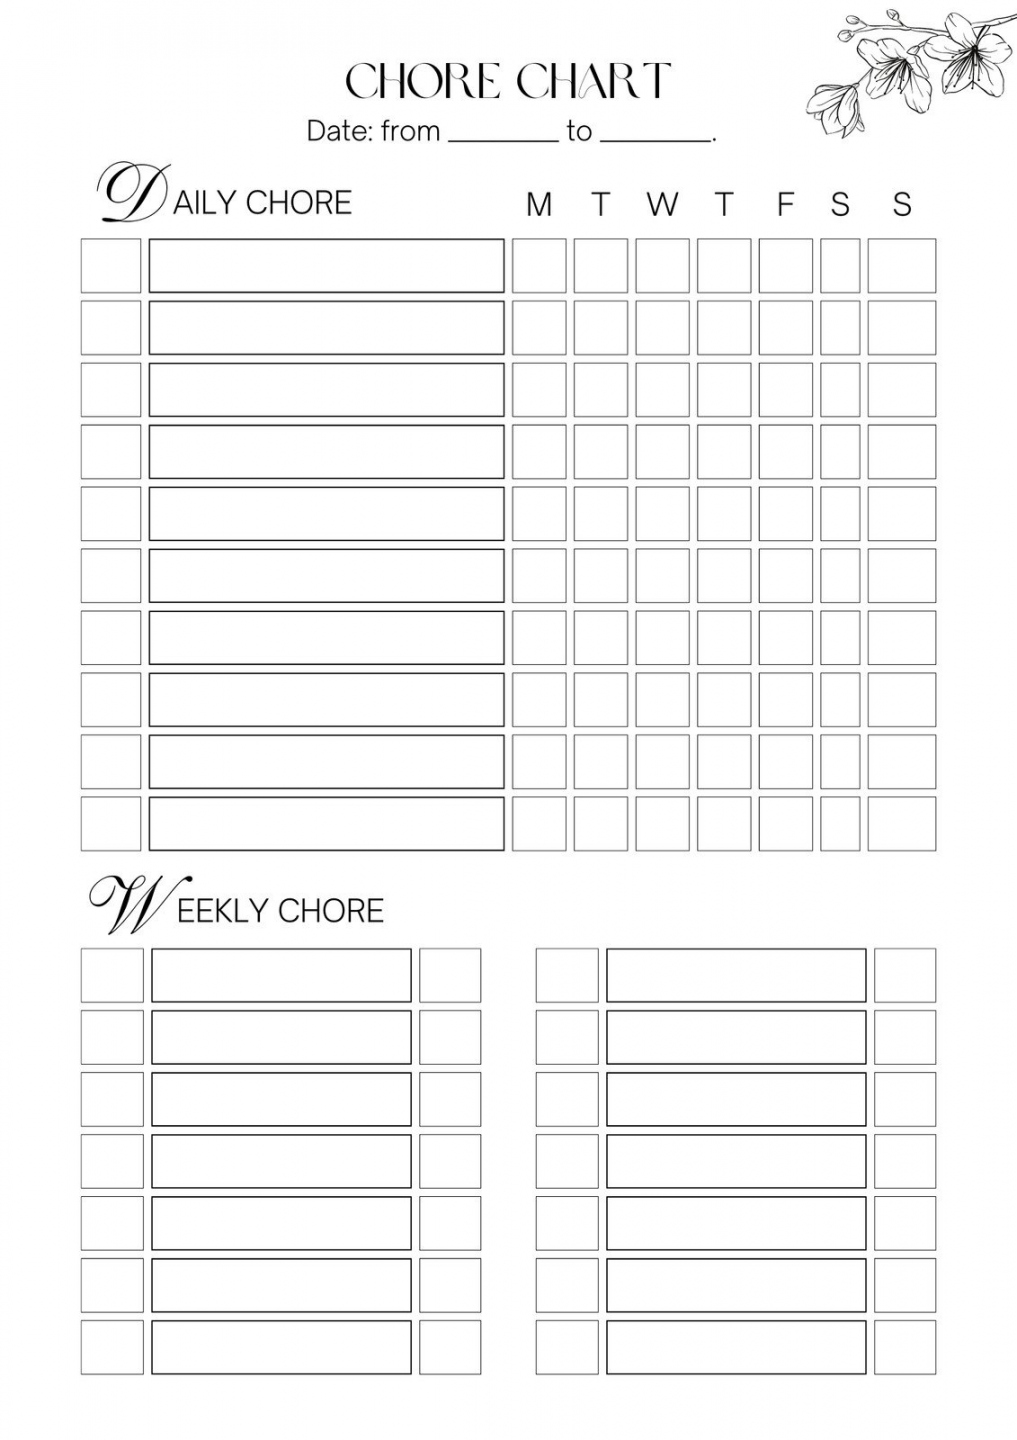 Free Printable Chore Charts - Printable - Free customizable chore chart templates to print  Canva